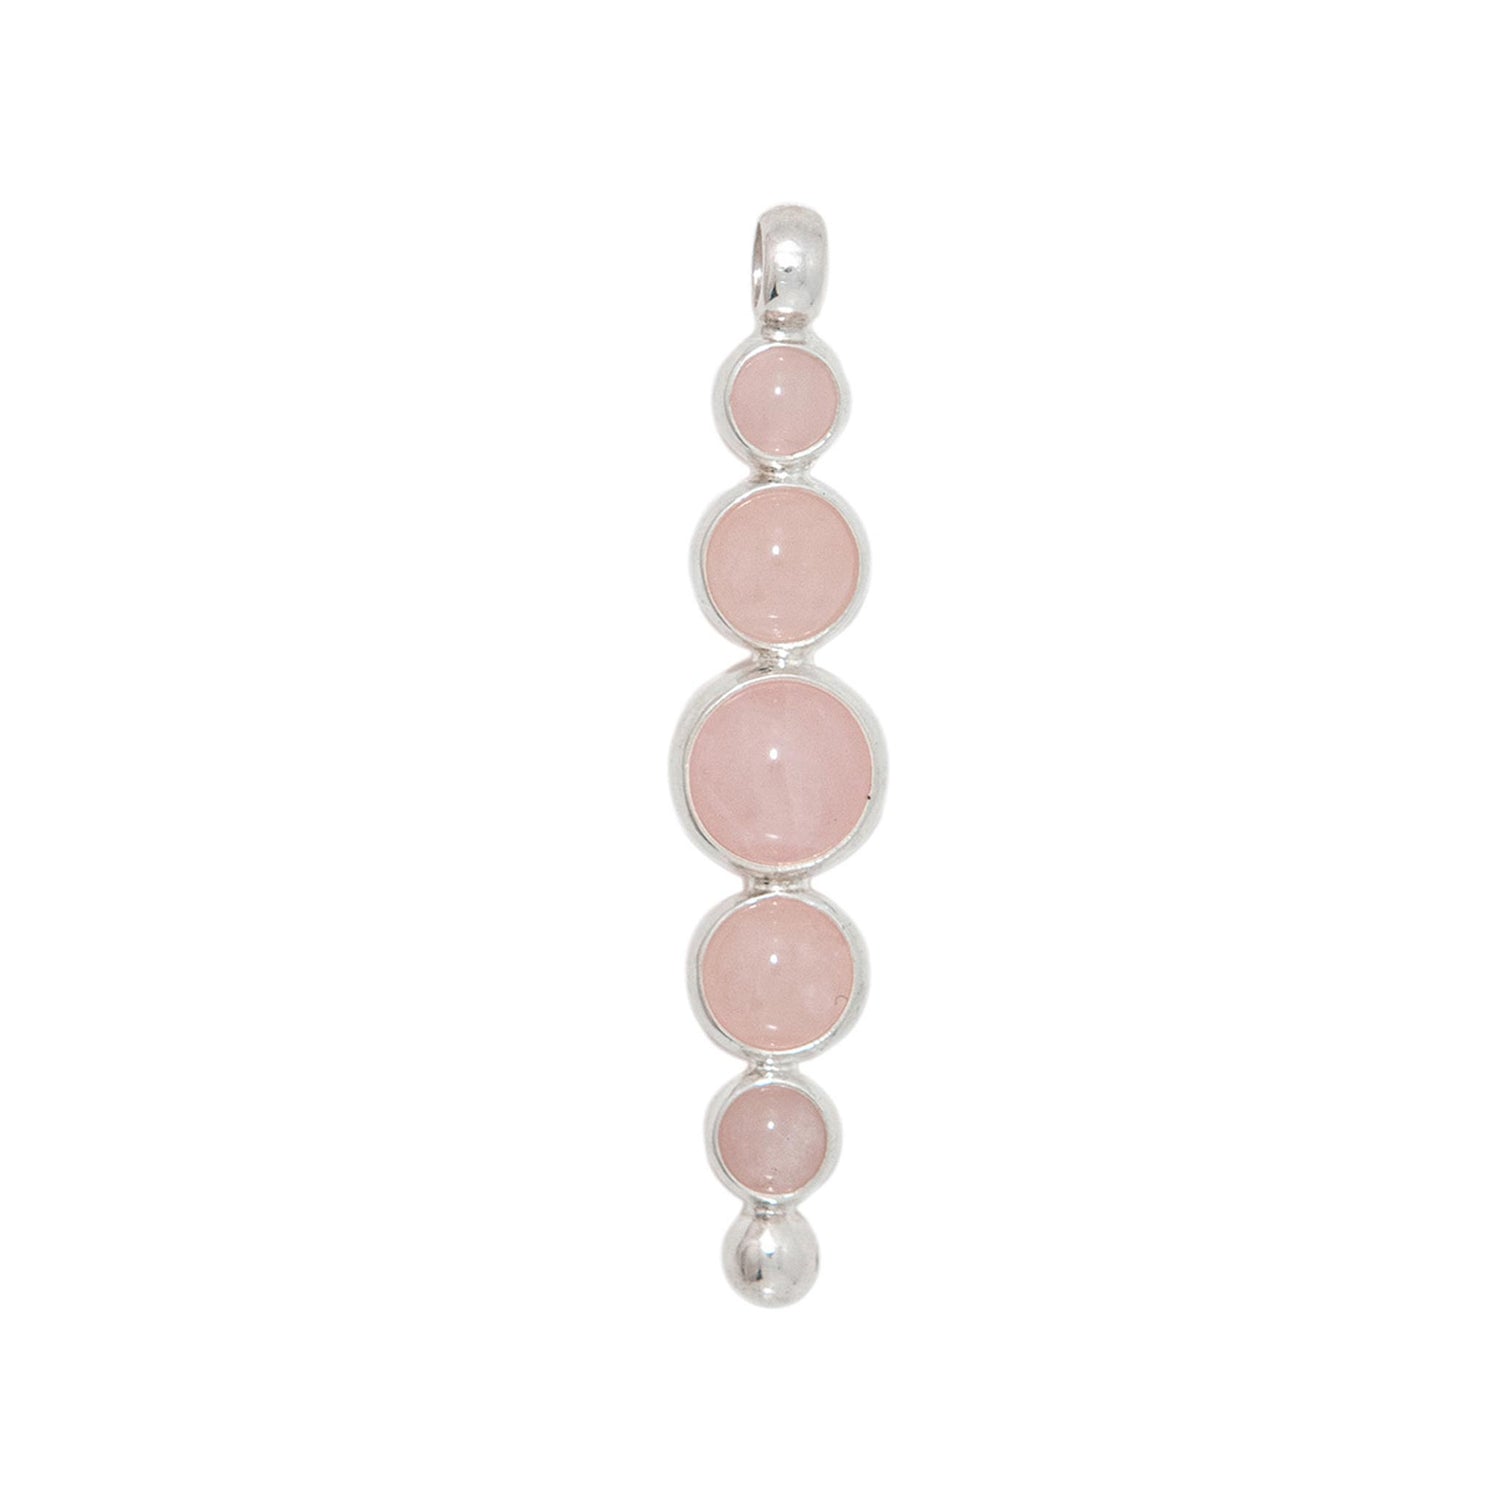 Buy Harmony Rose Quartz Pendant – Shop for Elegant Jewelry for Any Occasion